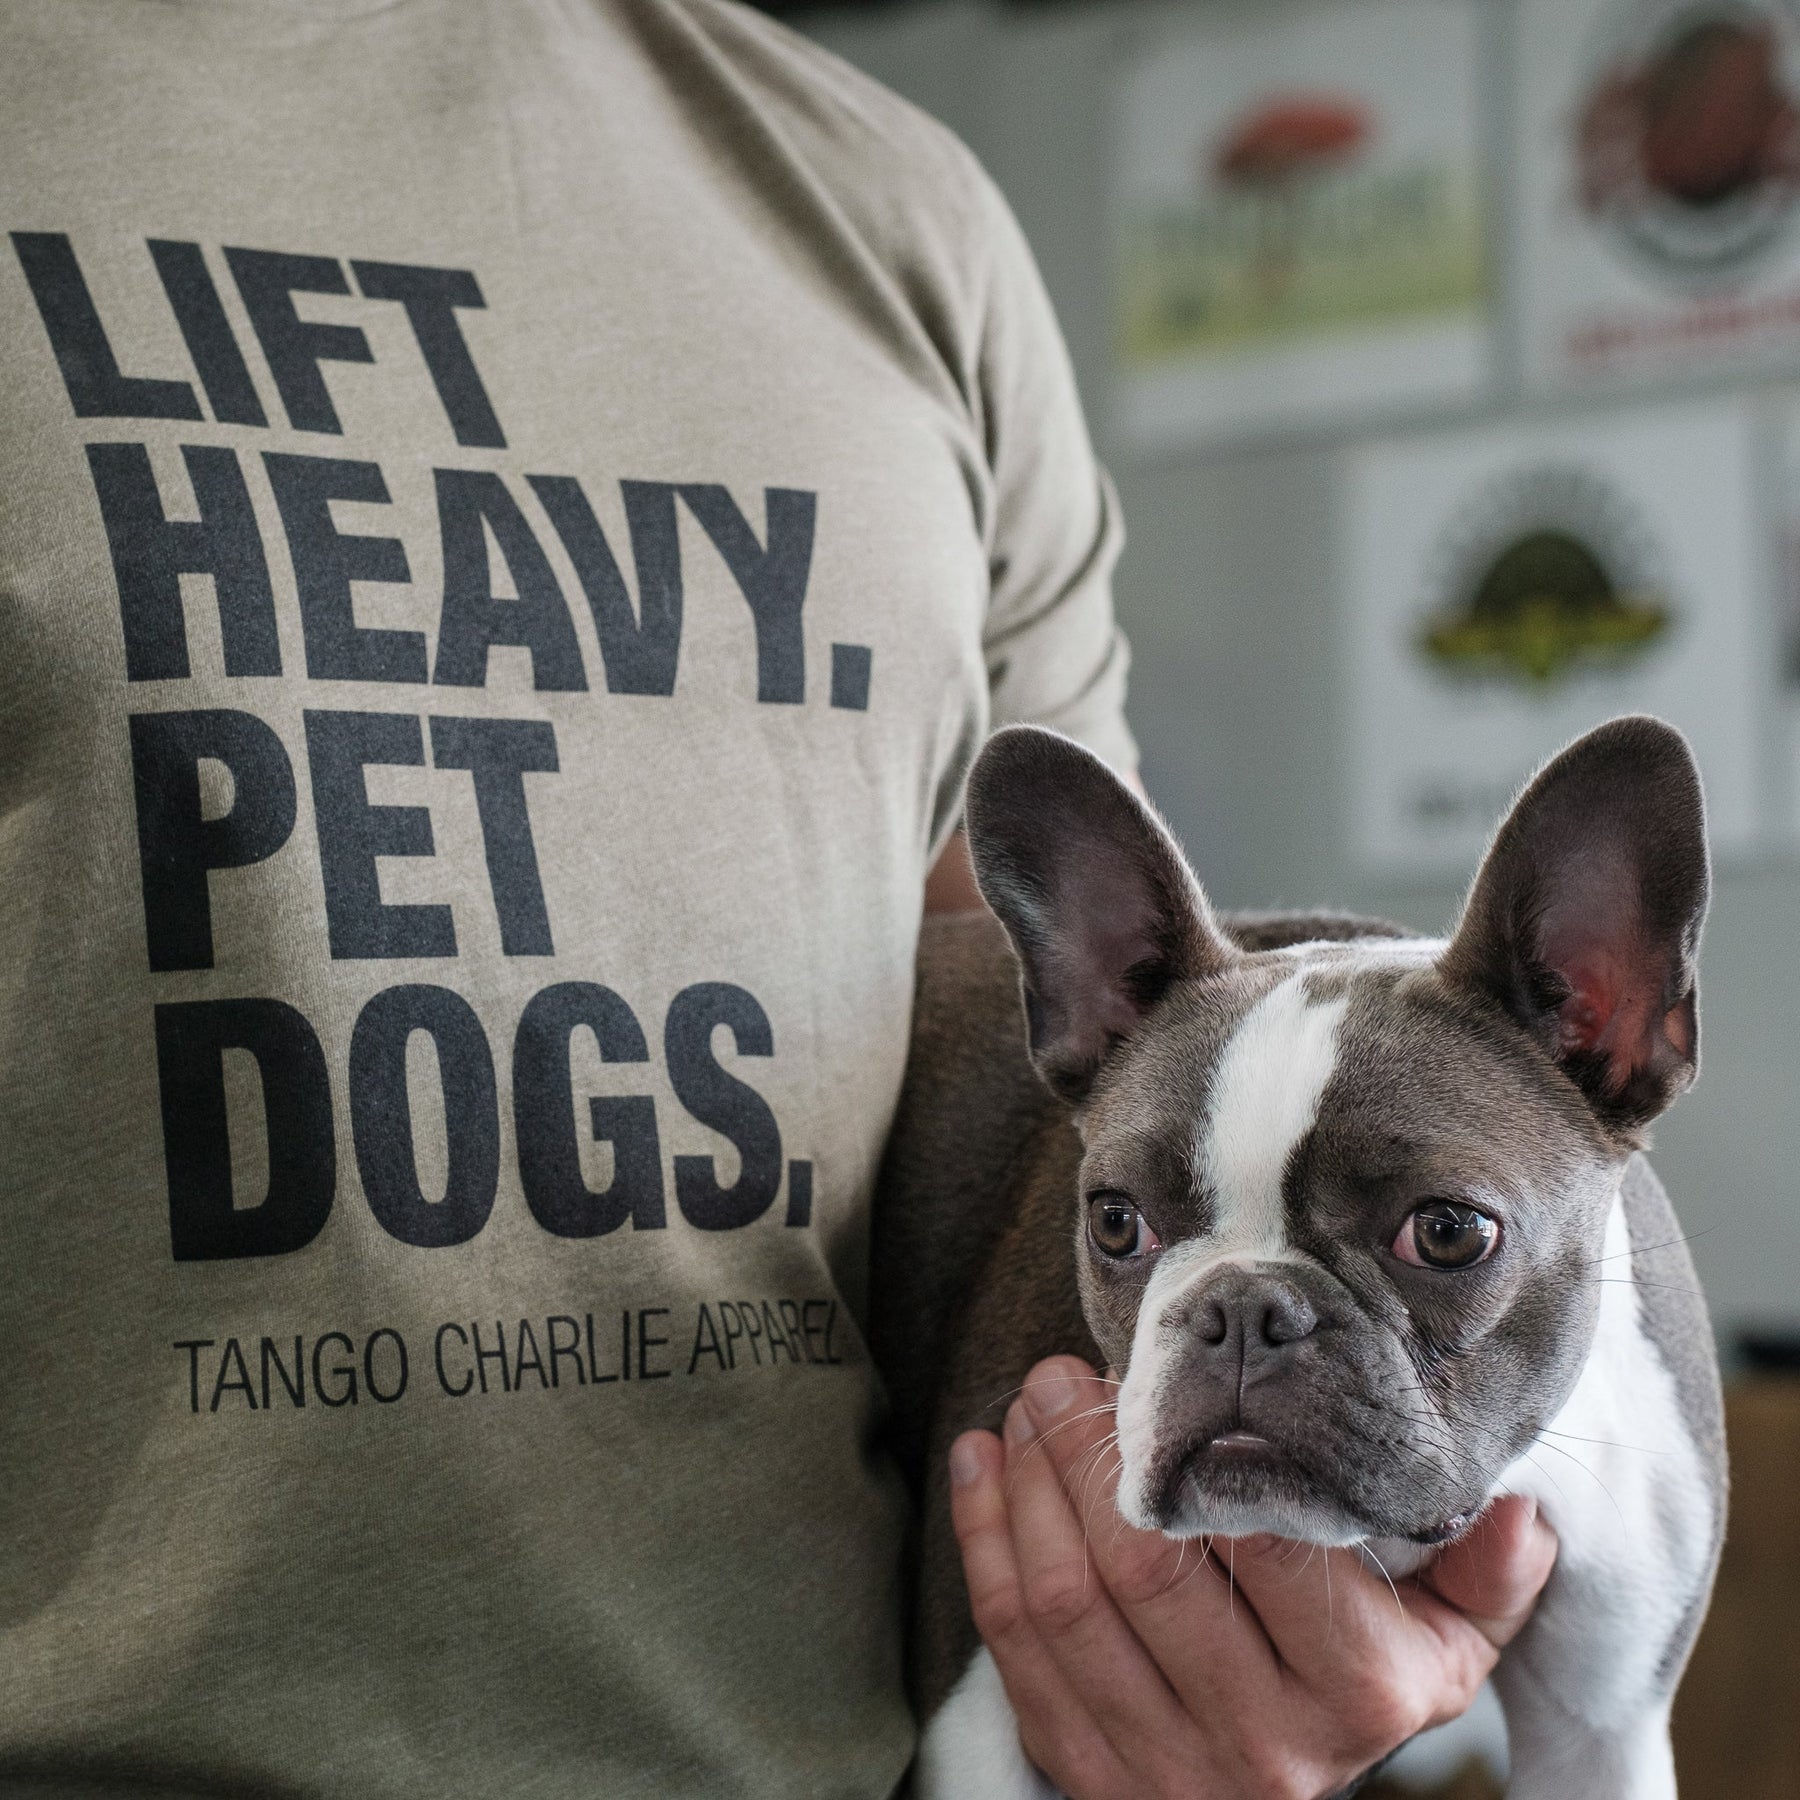 Lift Heavy. Pet Dogs. T-Shirt